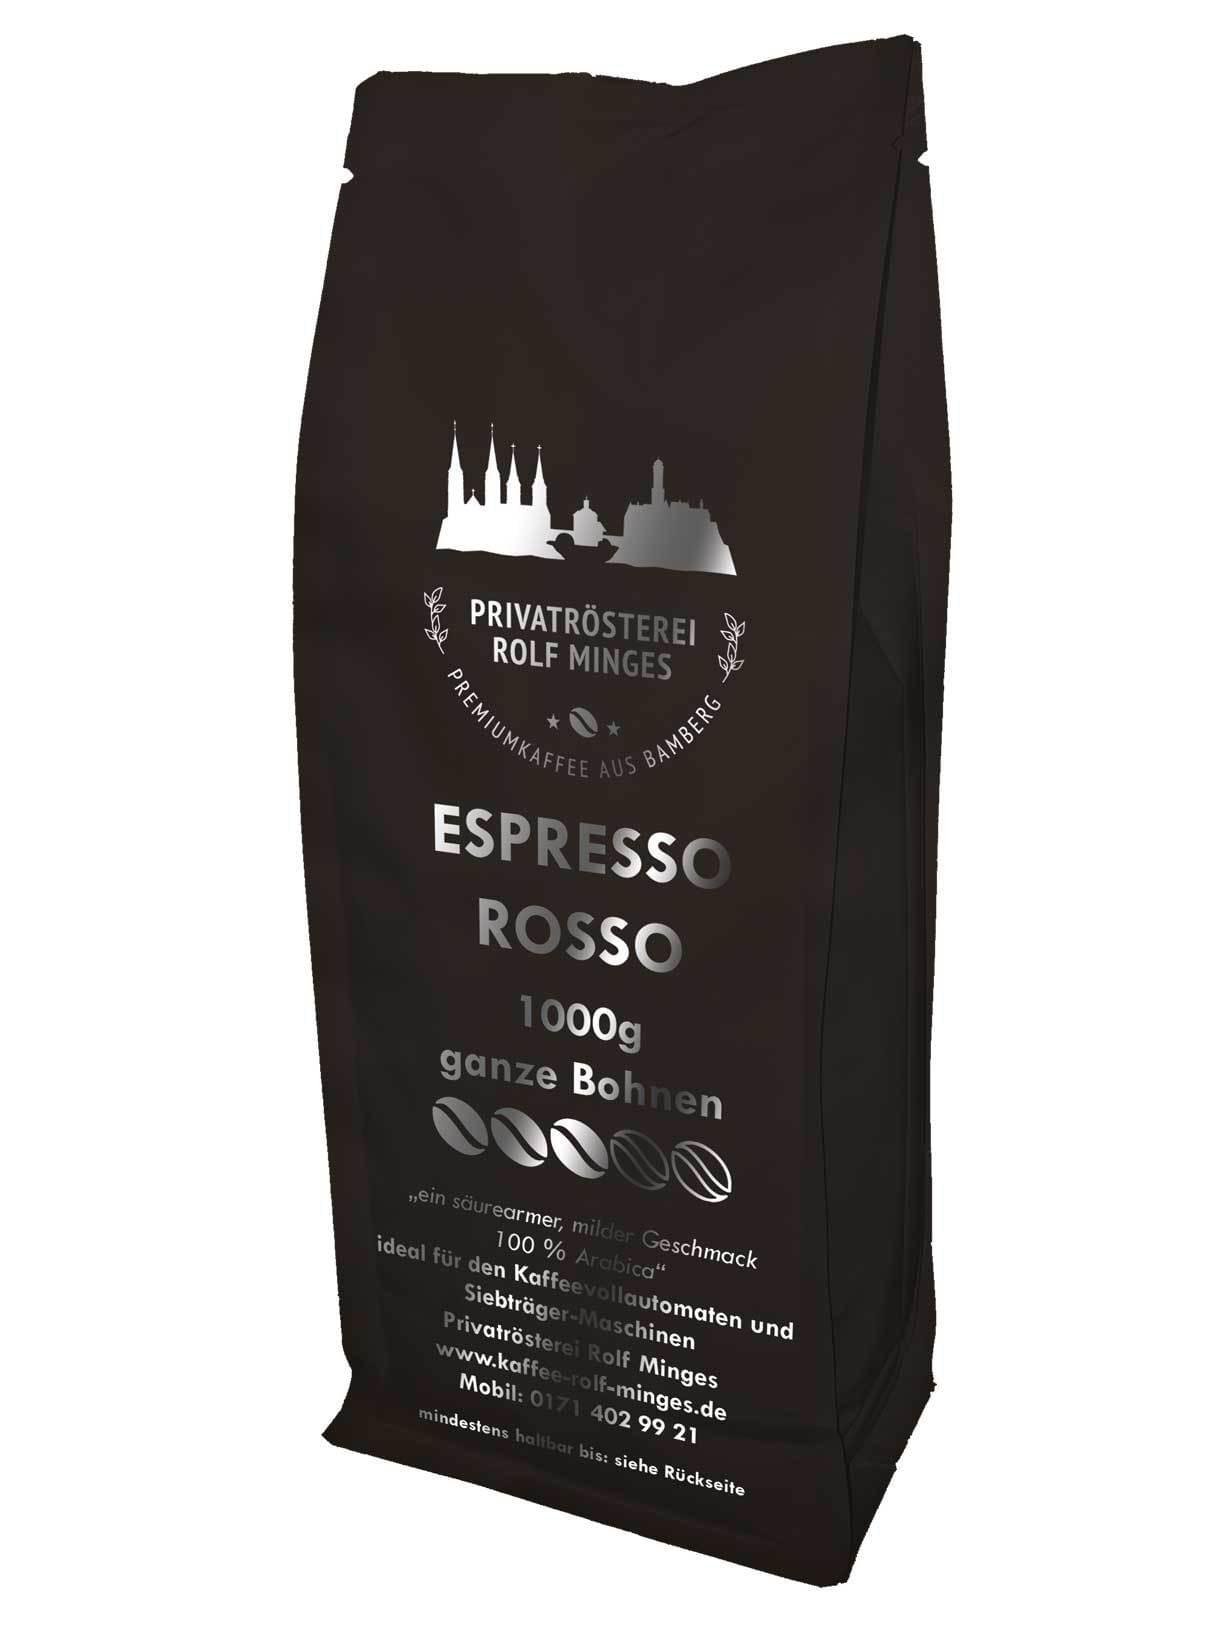 Privatrösterei Rolf Minges Espresso Rosso - 1000g